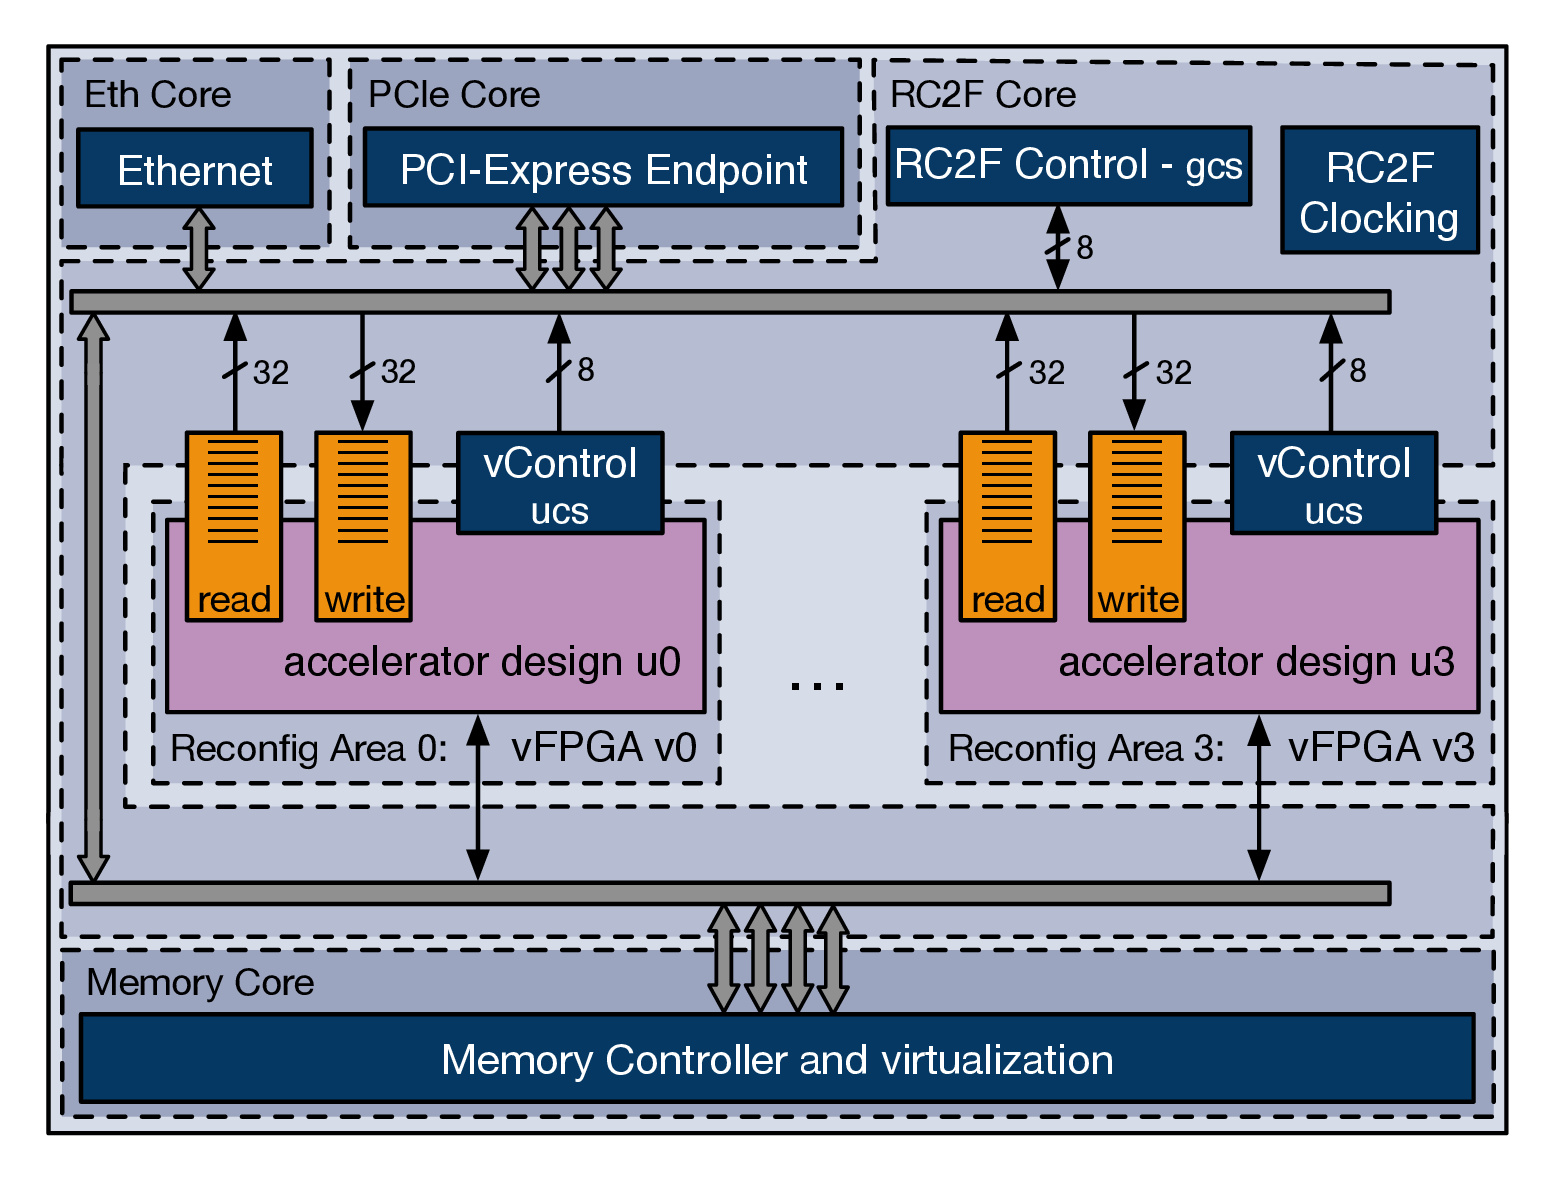 1 Einleitung Motivation FPGA auf Cloud - Cloudcomputing gewinnt an Bedeutung - FPGAs bieten Flexible spezielle Hardware